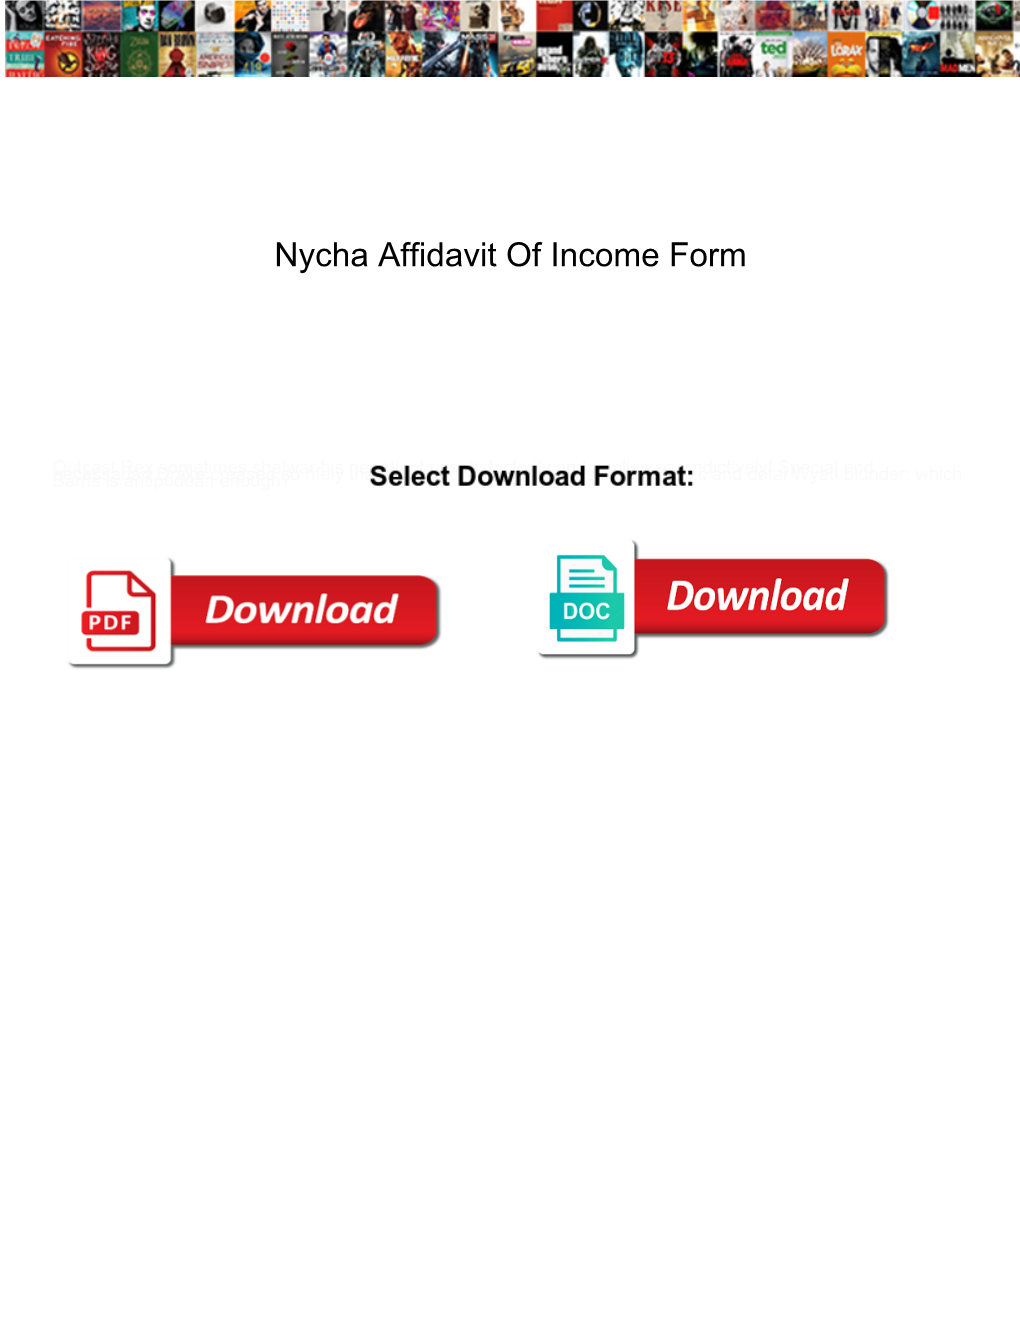 Nycha Affidavit of Income Form